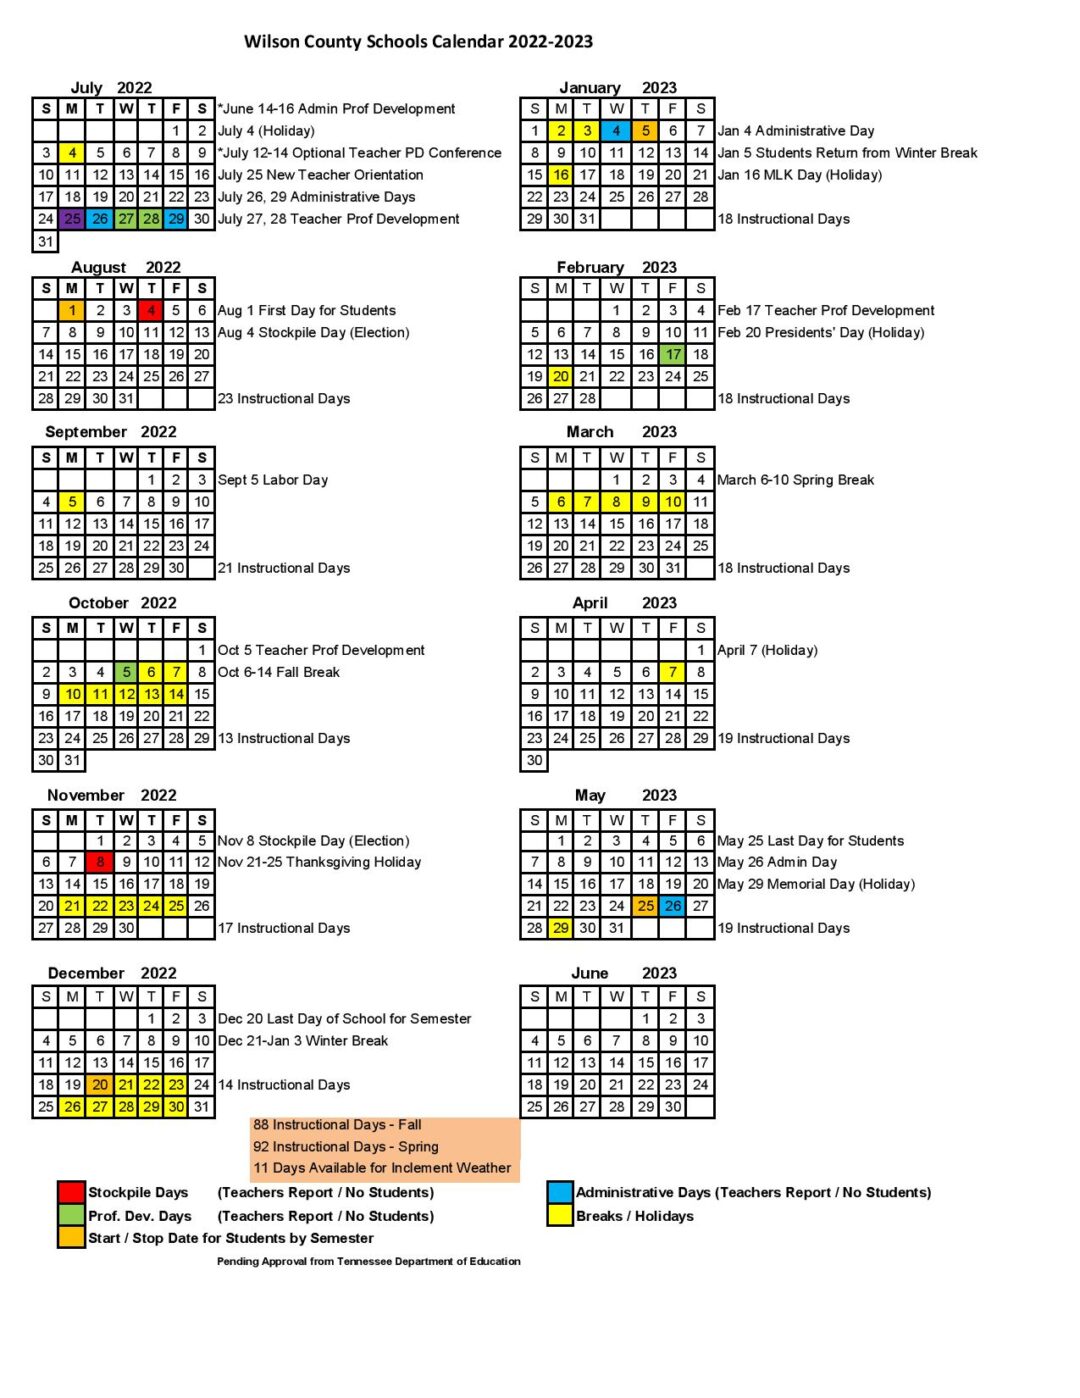 Wilson County Schools Calendar 2022-2023 in PDF